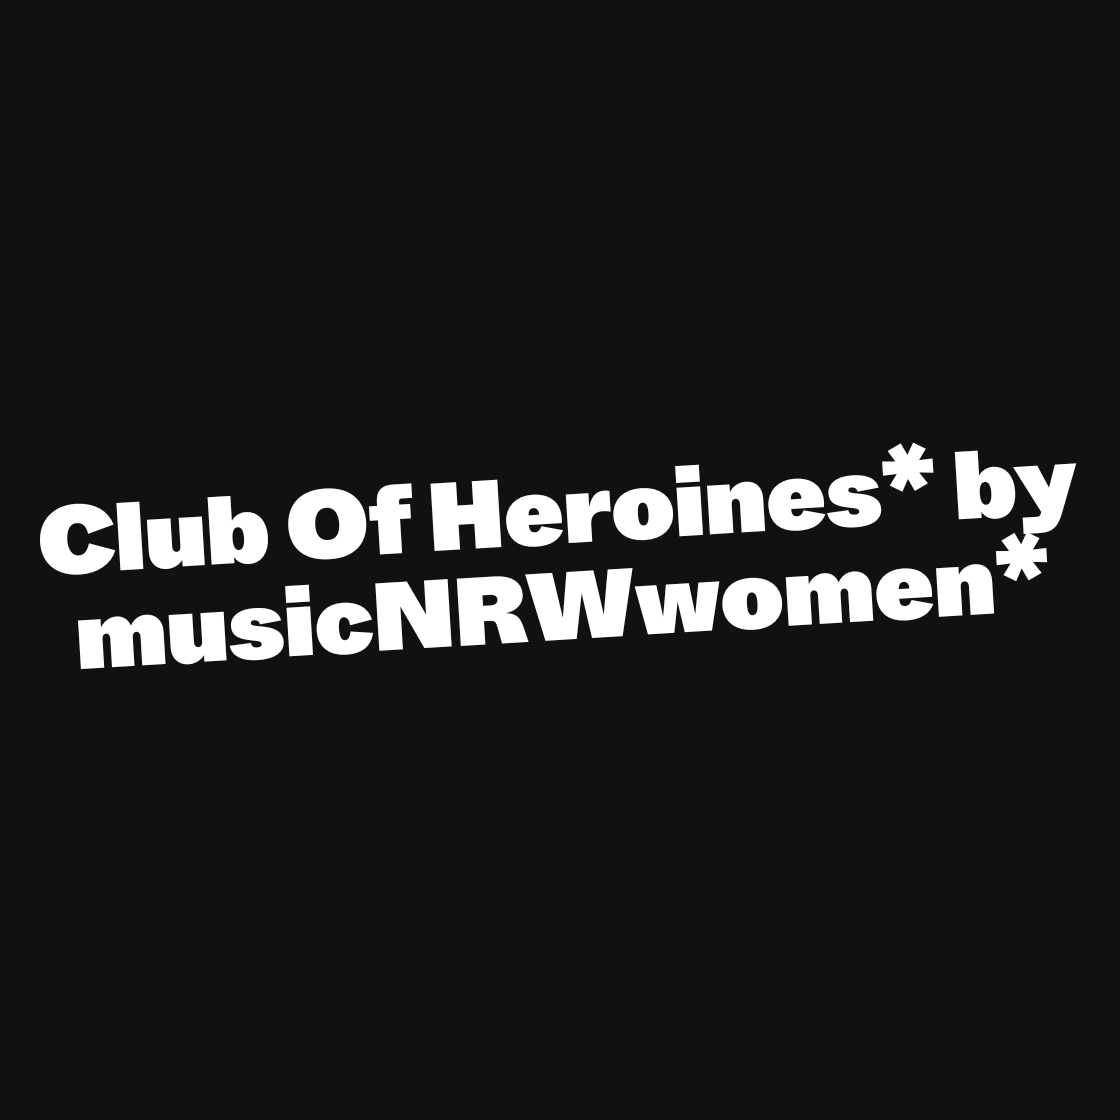 Club of Heroines* by musicNRWwomen*